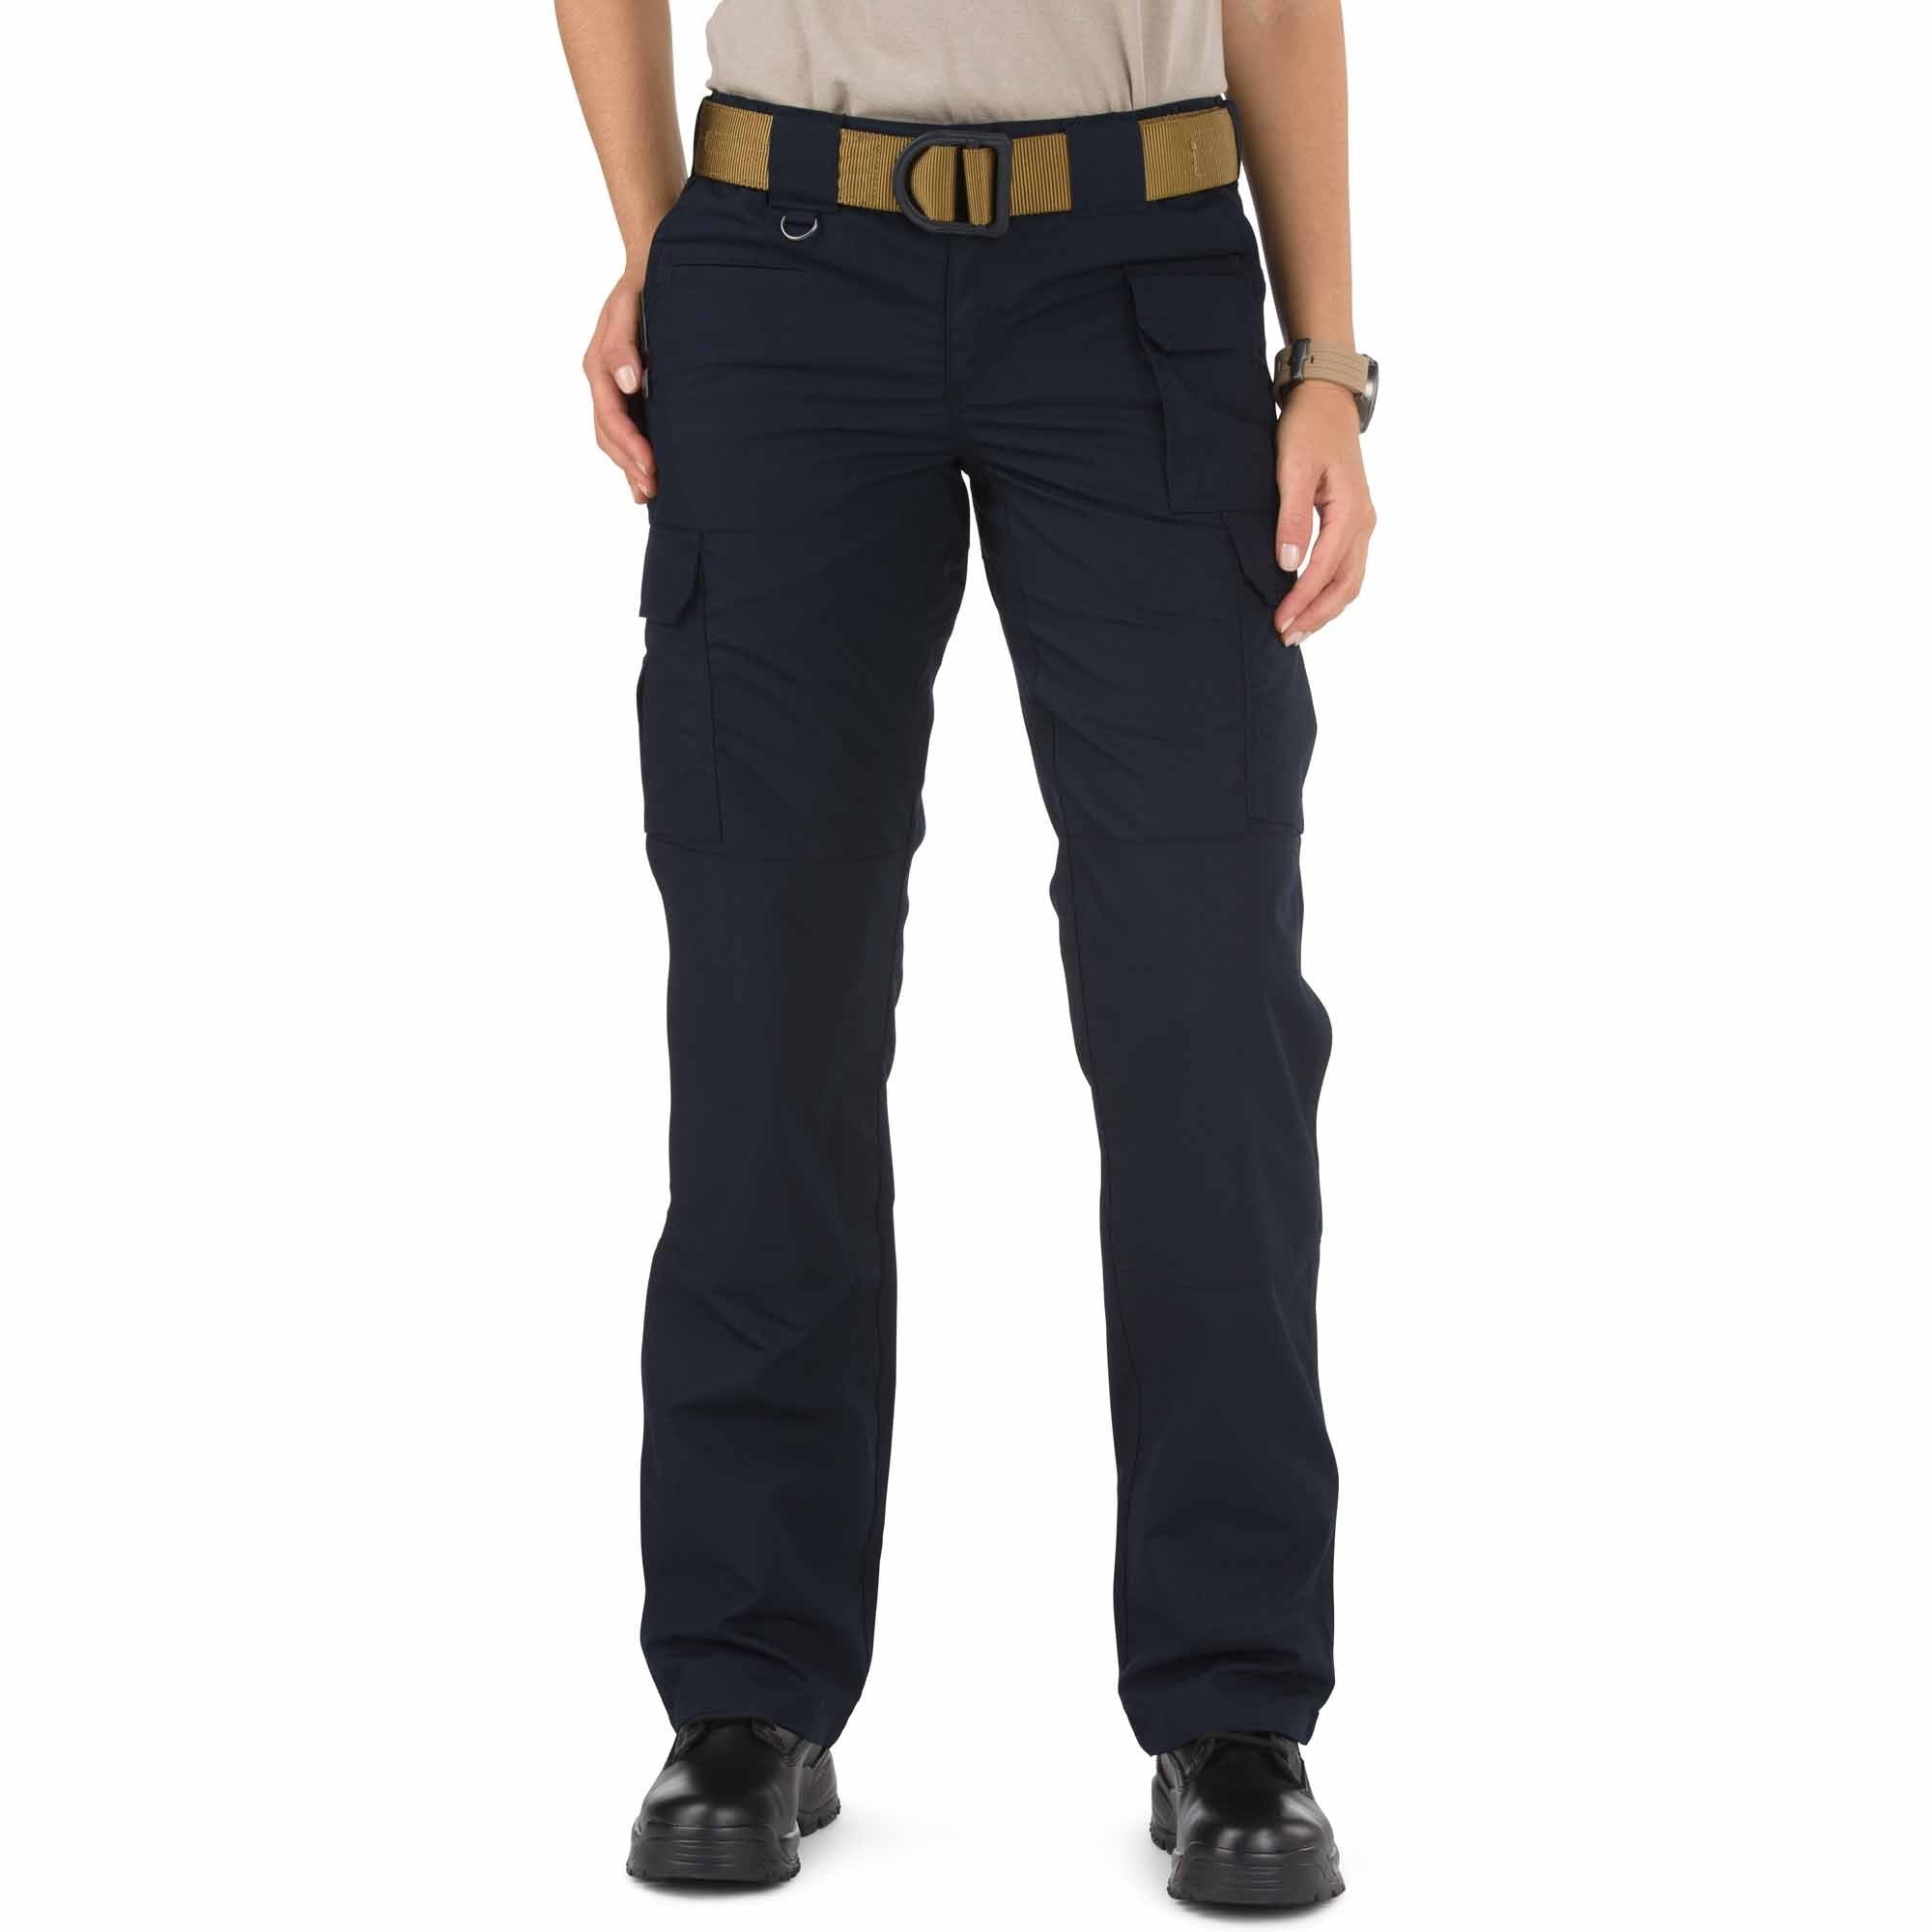 5.11 Women's TACLITE Pro Pant Dark Navy Pants 5.11 Tactical Tactical Gear Supplier Tactical Distributors Australia